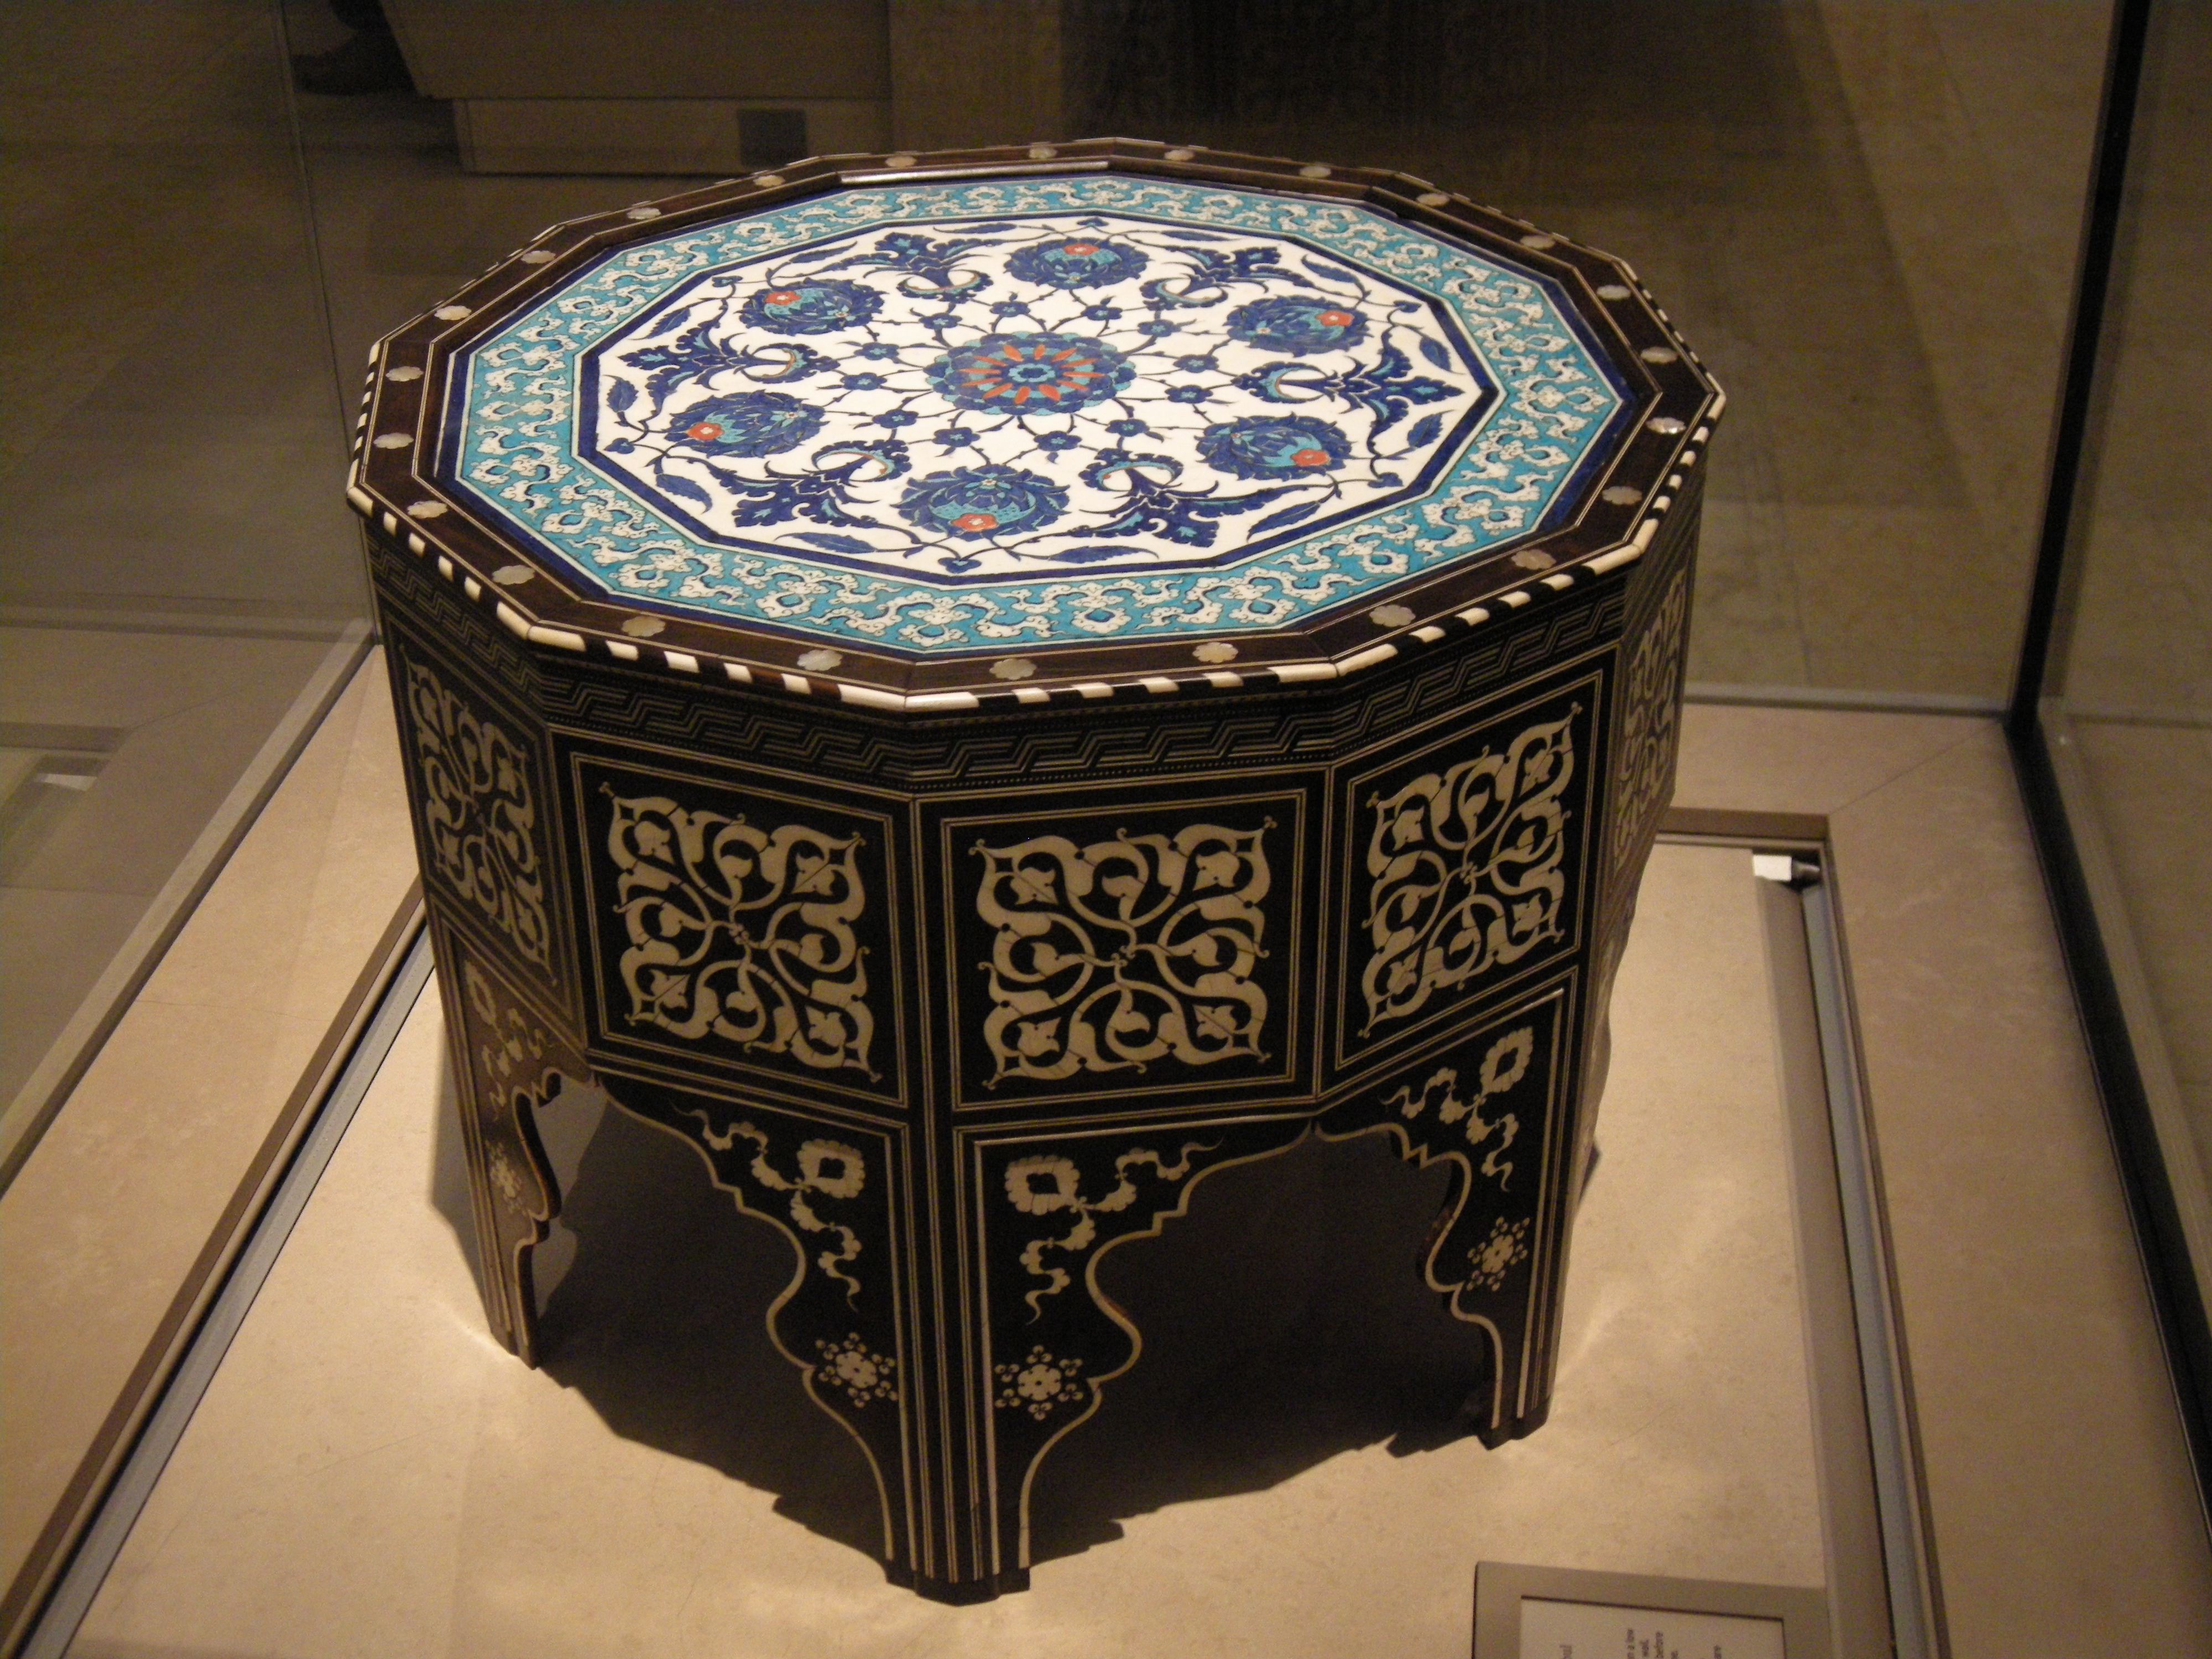 Islamic art - Wikipedia, the free encyclopedia